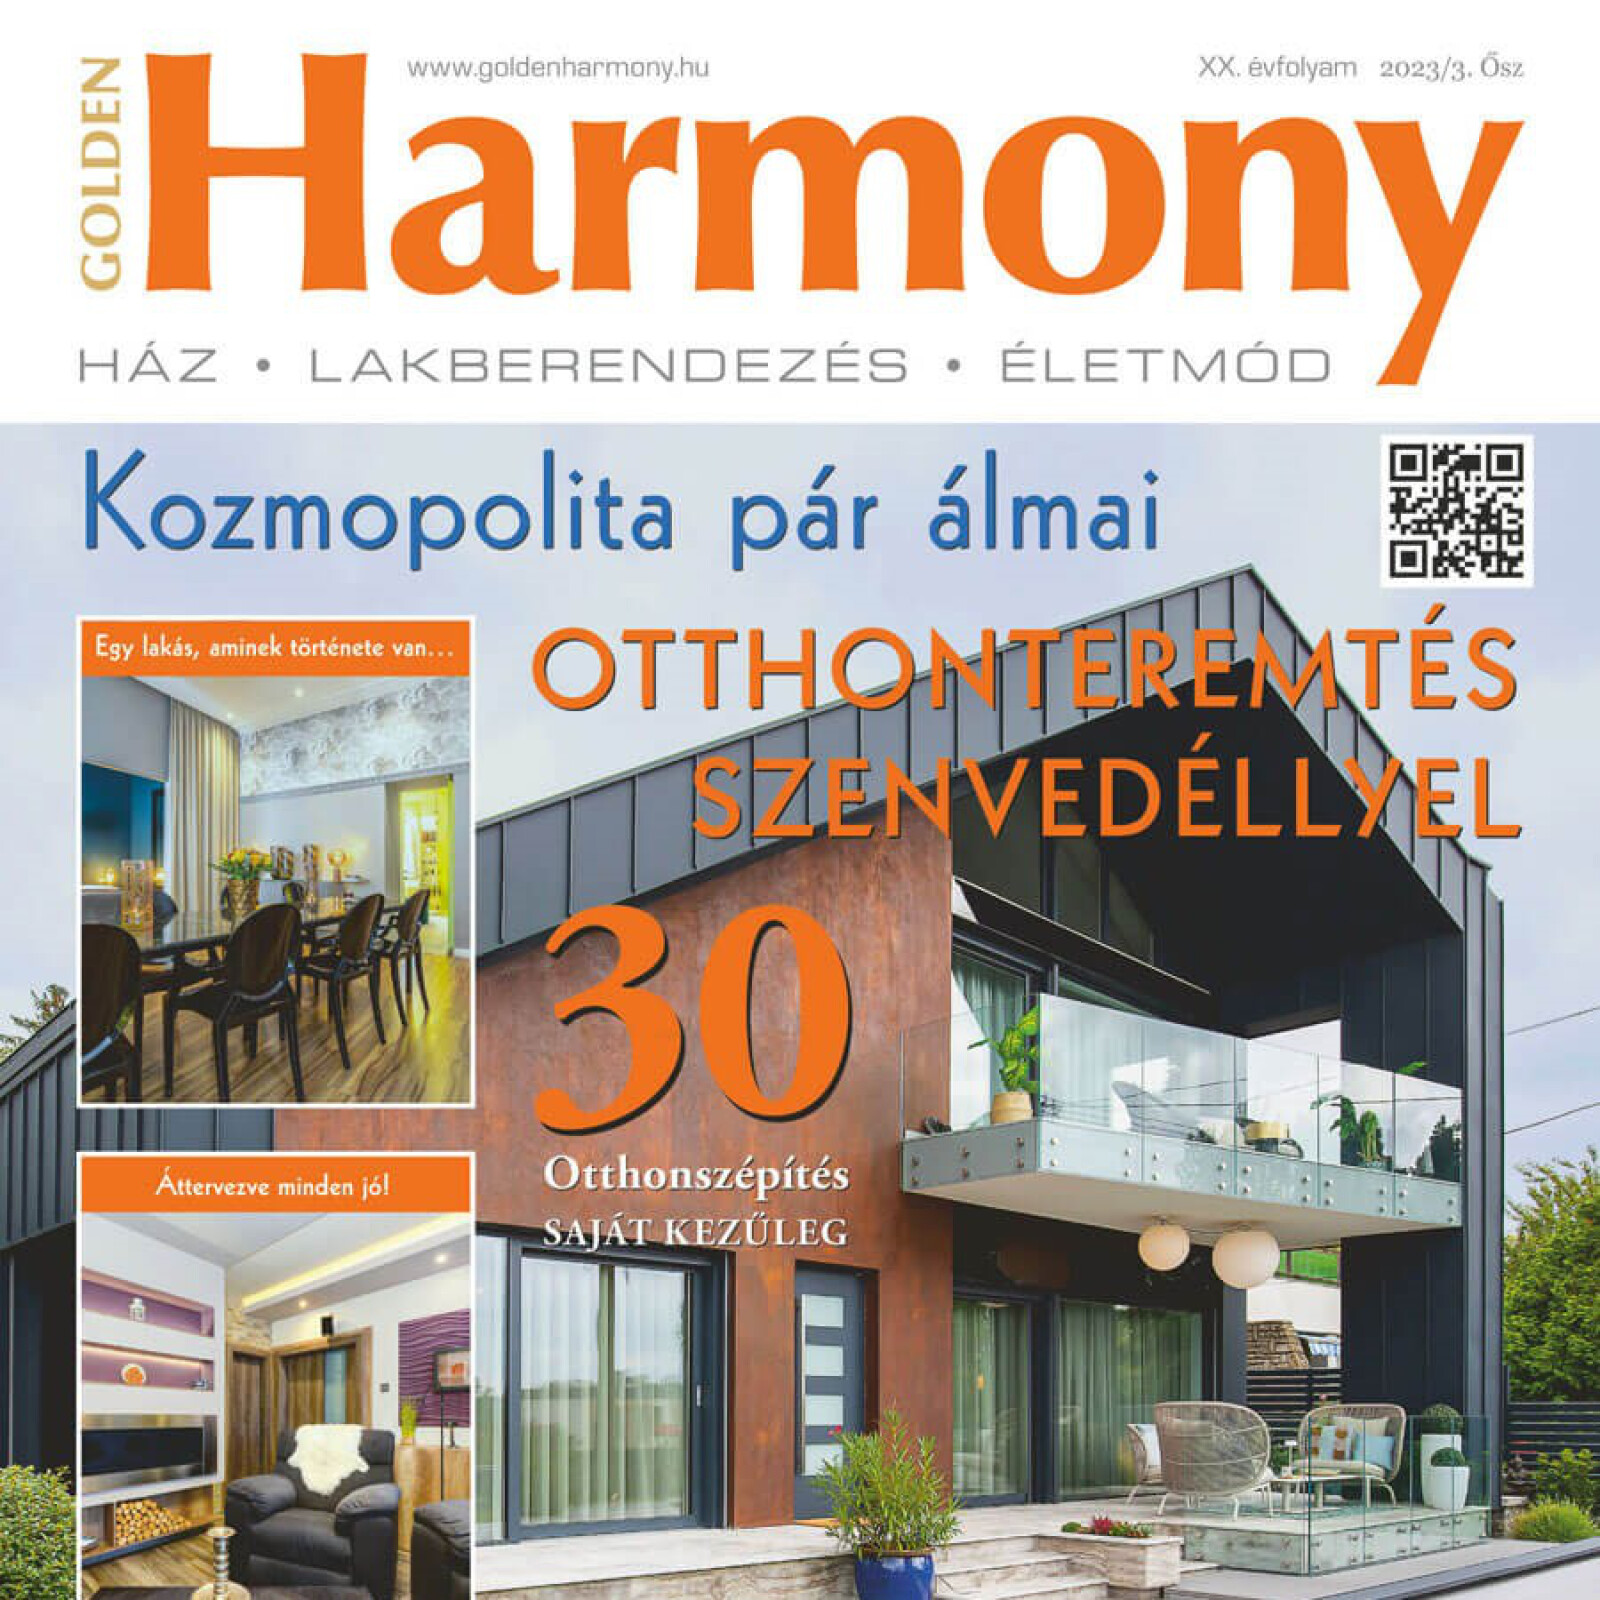 Lénafa Bútor a Golden Harmony magazinban!